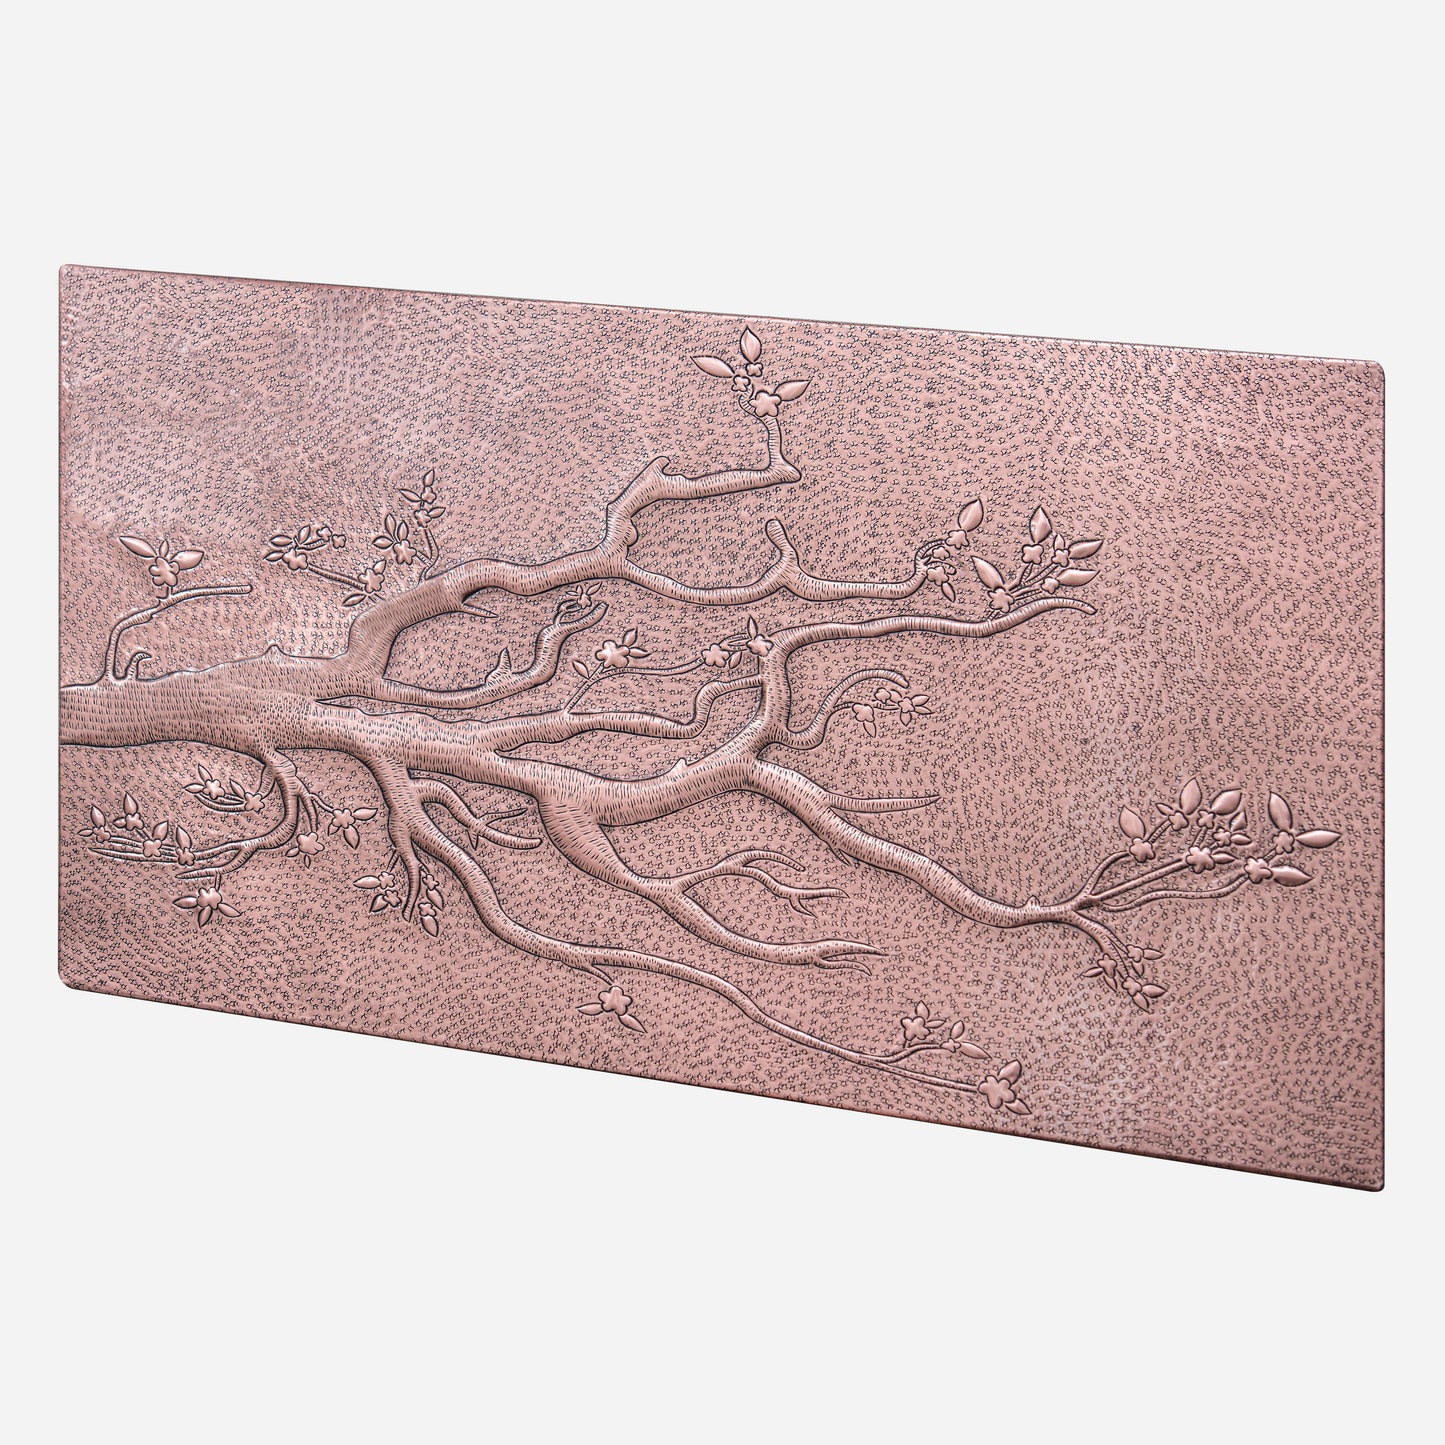 Tree Branch Copper Backsplash Tile